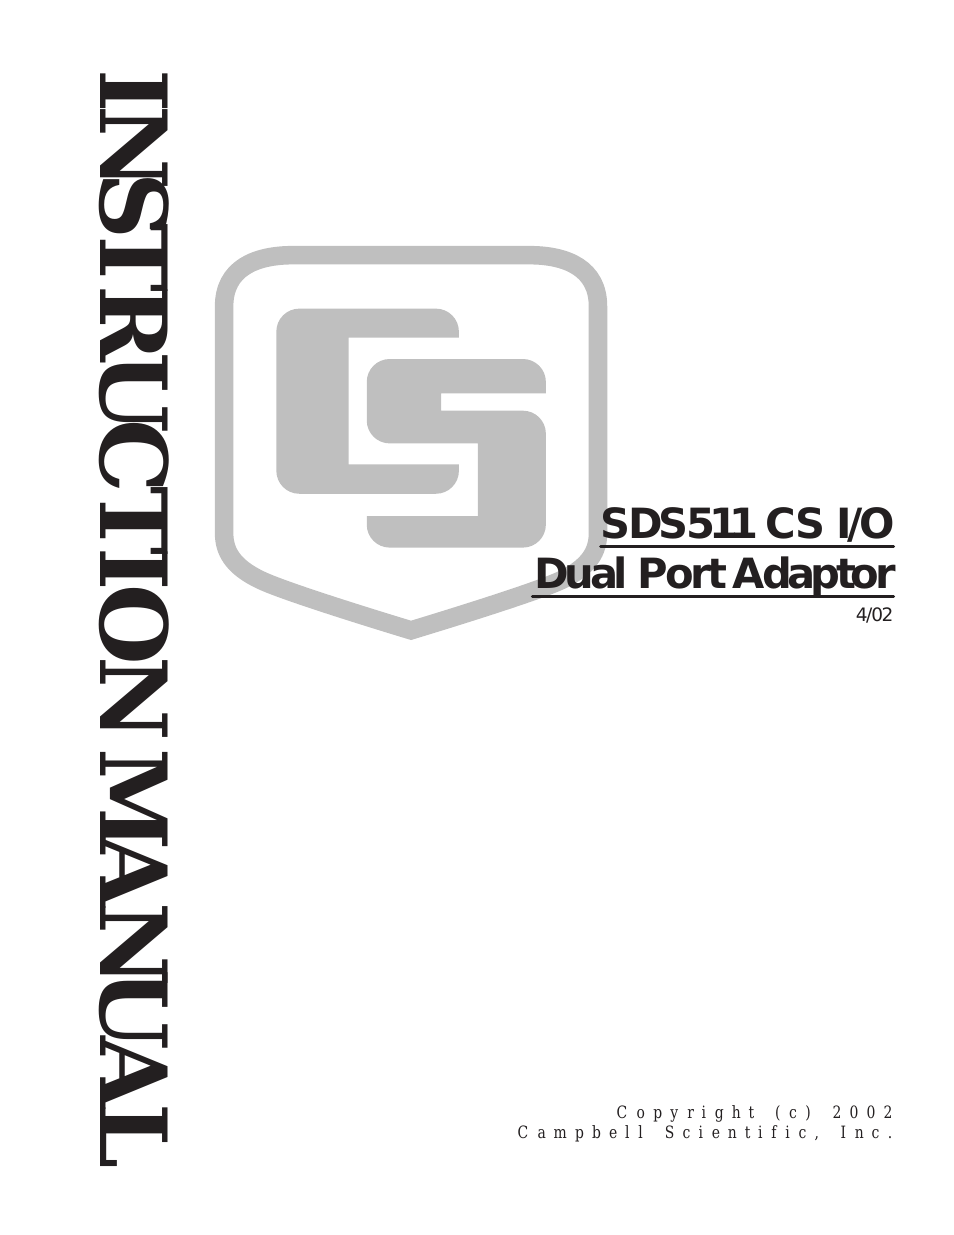 SDS511 CSA Dual CS I/O Port Adapter